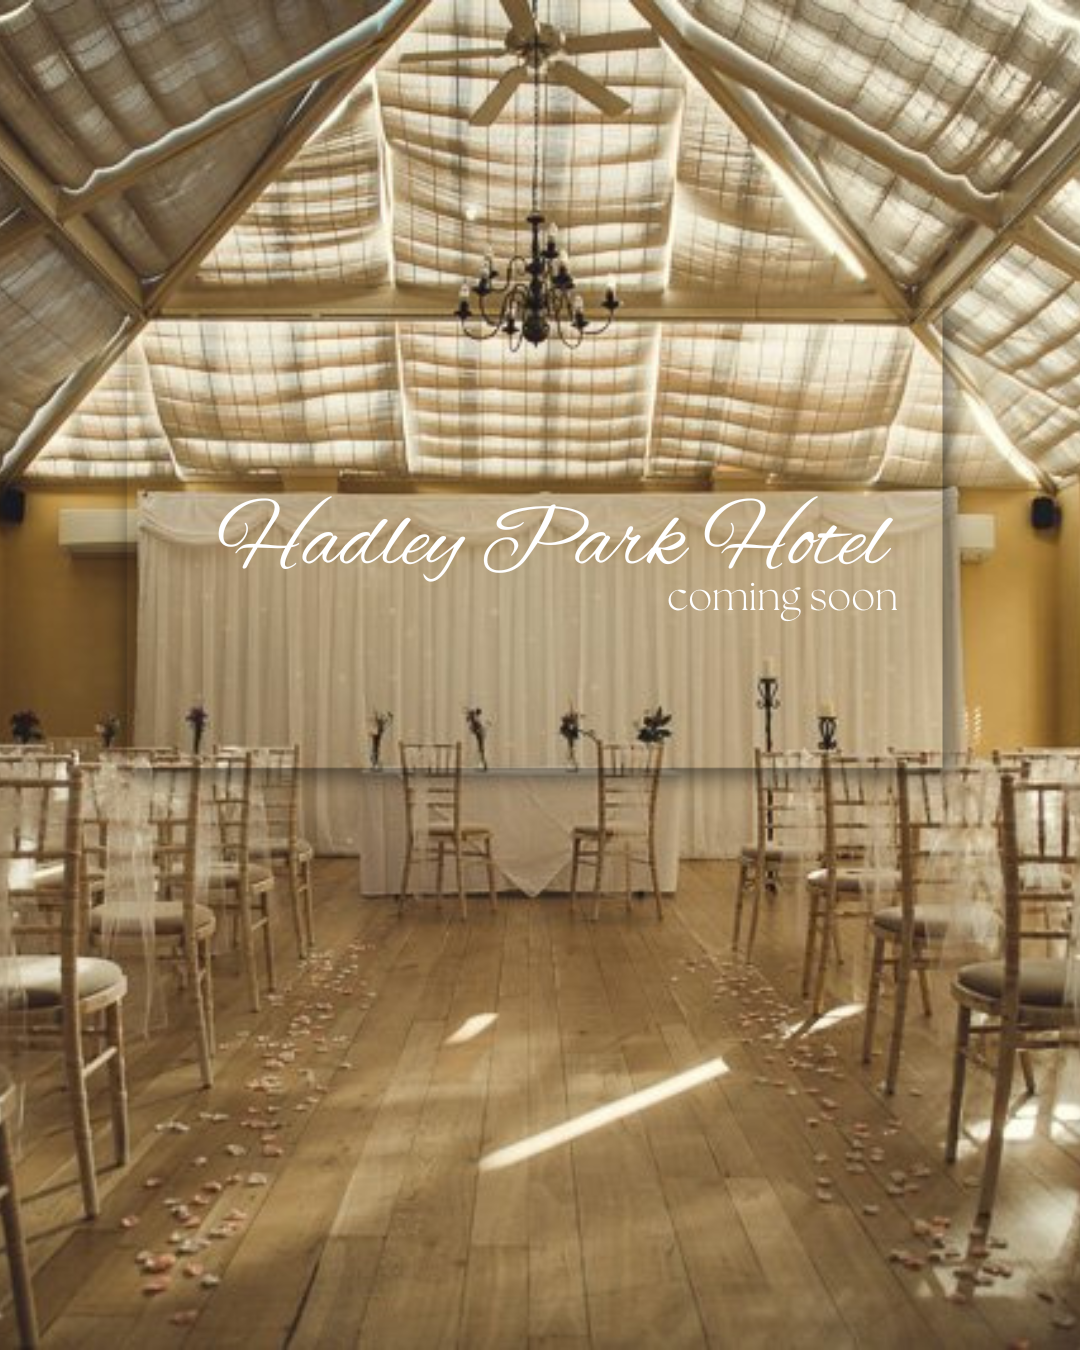 Hadley-Park-Hotel-Shropshire-Wedding-Venue.png